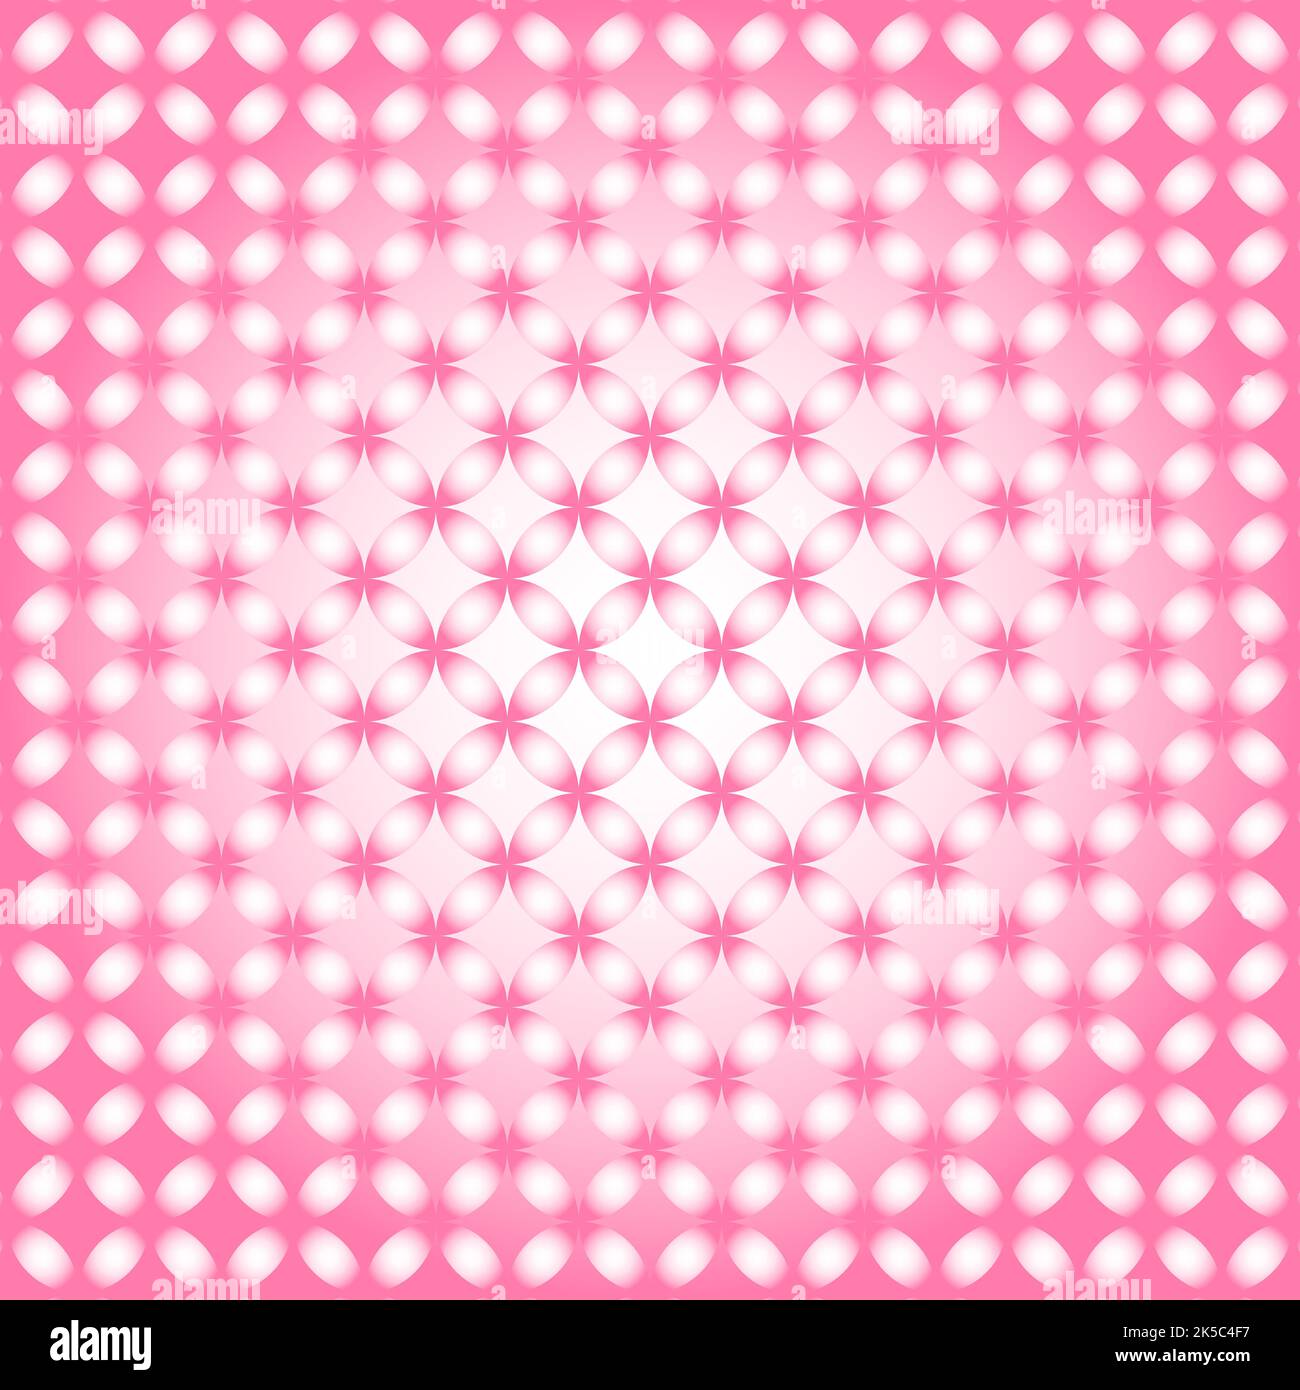 Cherry Blossom Flower Of Life Pattern Vector Illustration Stock Vector